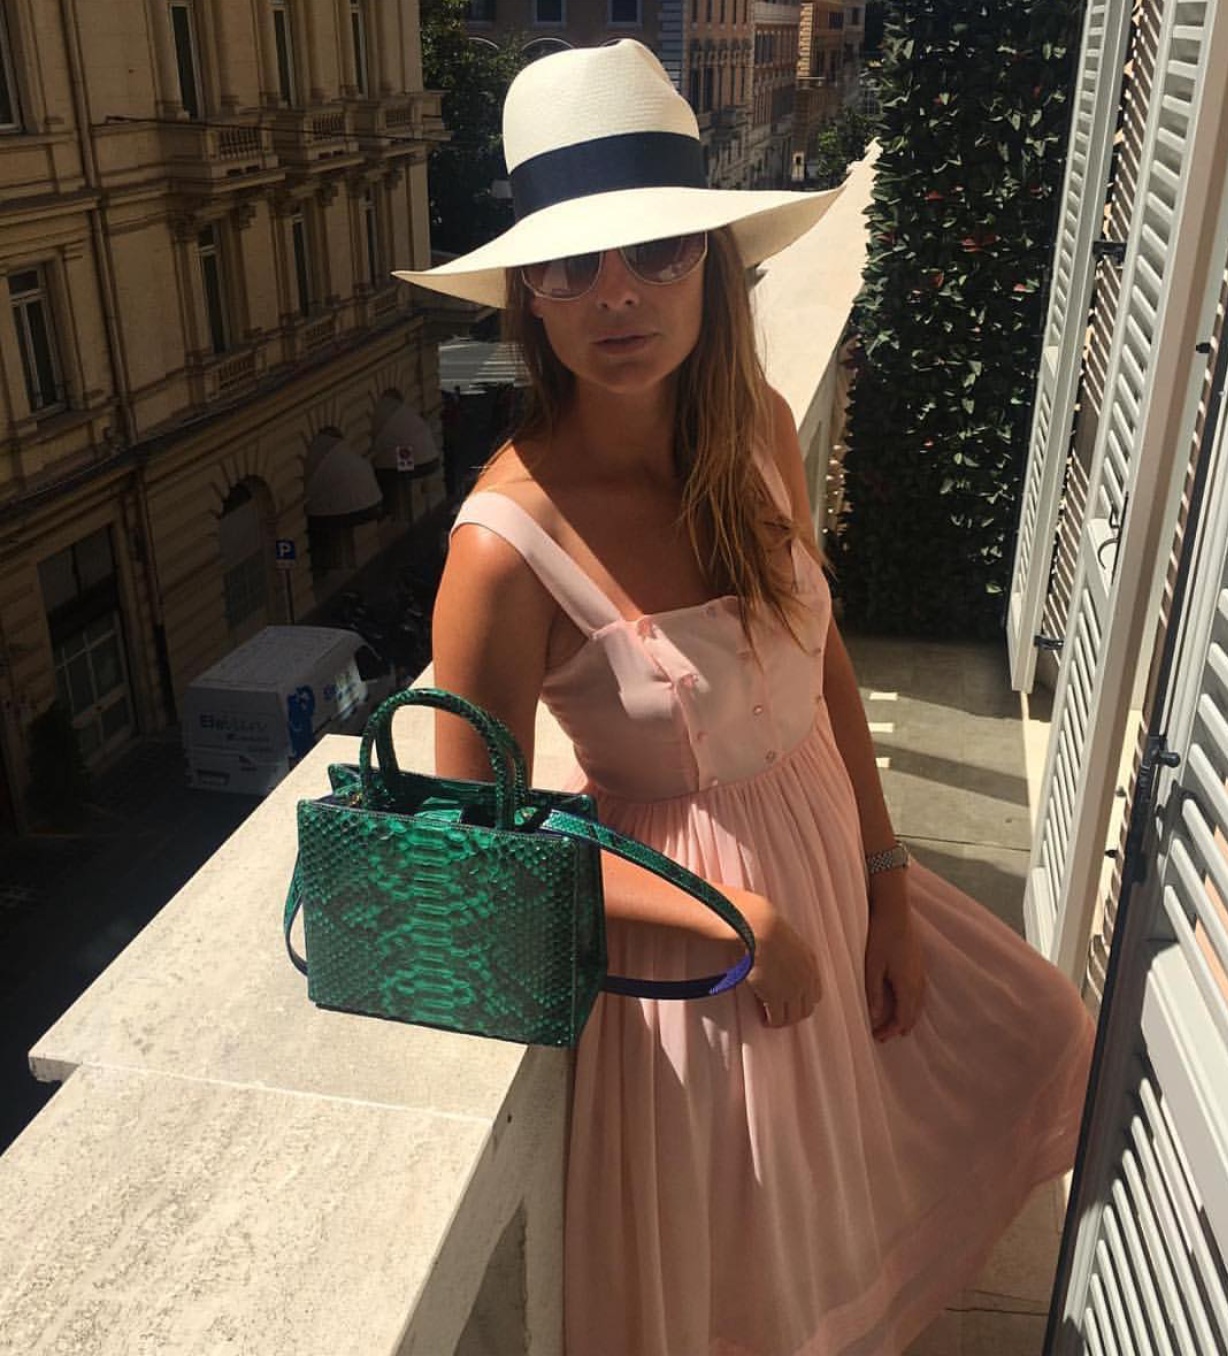 Darya Veledeeva, Editor in Chief of Harper’s Bazaar Russia, spending time in Rome, Italy wearing Valentina &amp; Valentia. As seen on Darya’s Instagram page.